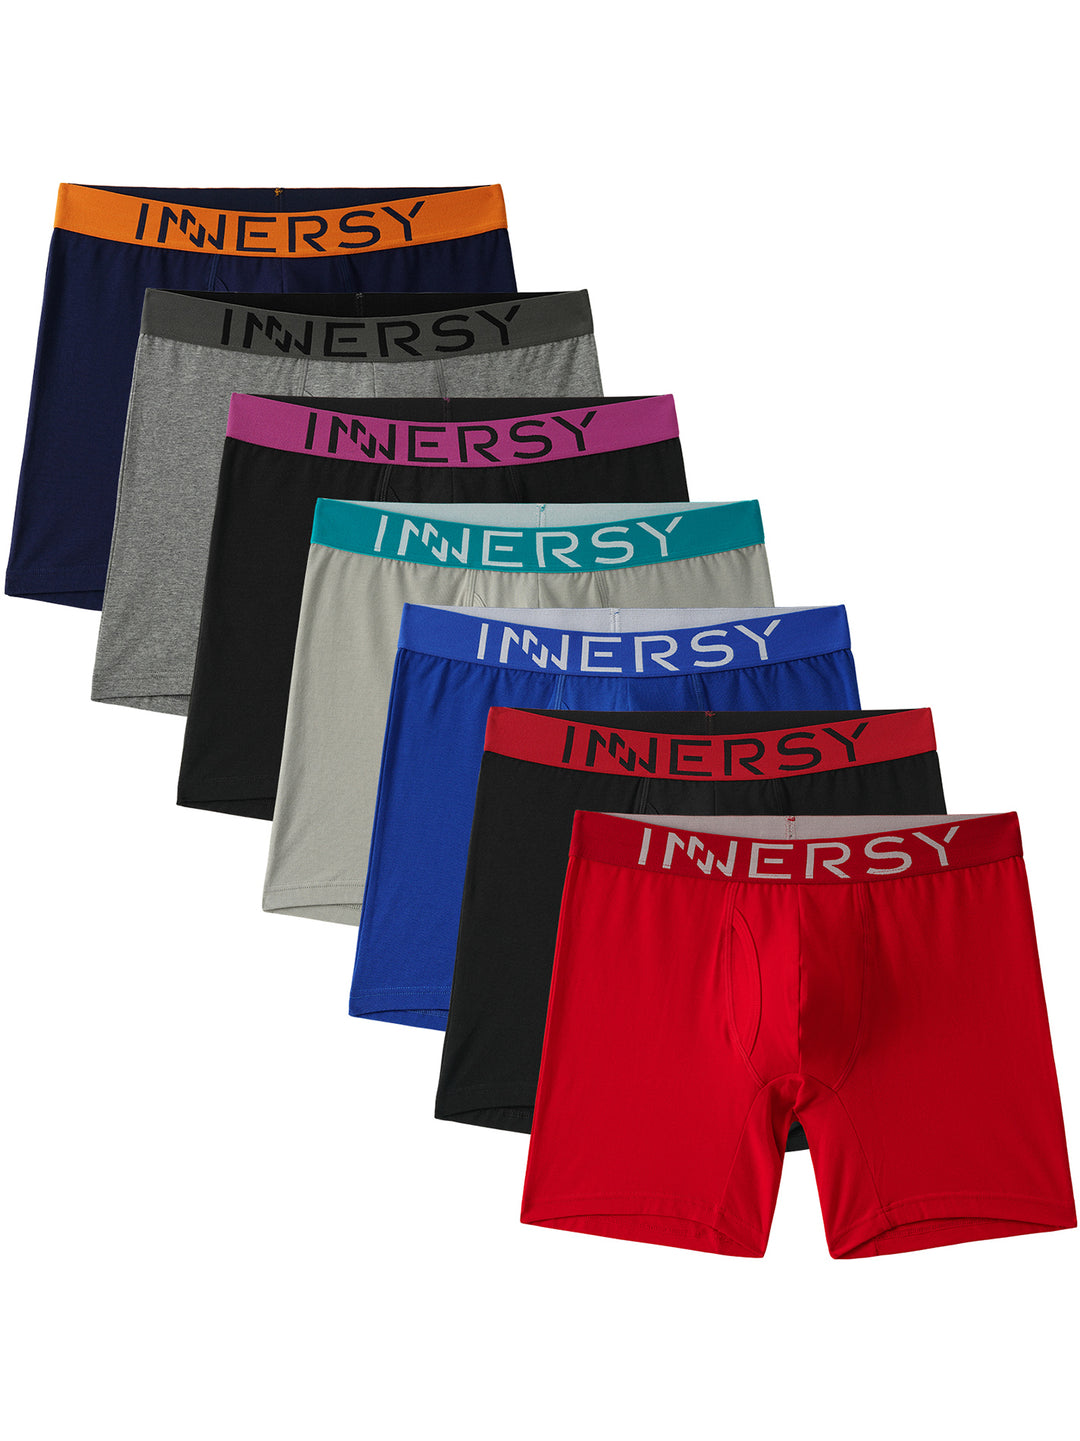 Men's Boxer Briefs, Men's Underwear 7 Pack